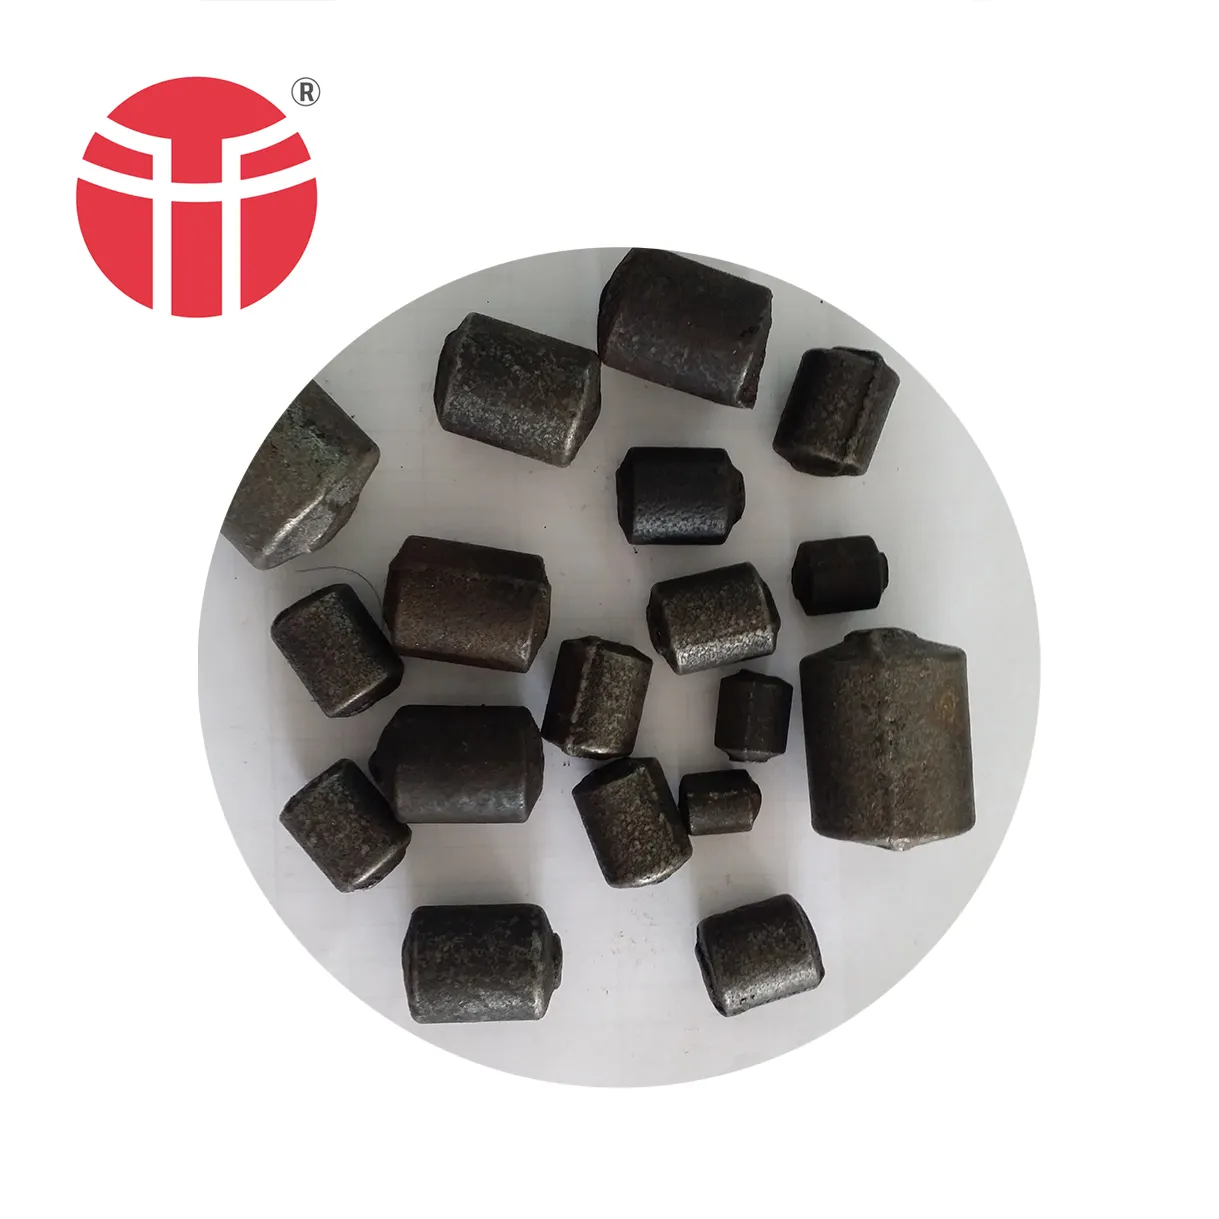 Tinggi medium rendah paduan die casting penggilingan krom Cr karbon besi baja cylpebs jenis pengecoran untuk dijual tambang tambang bola pabrik